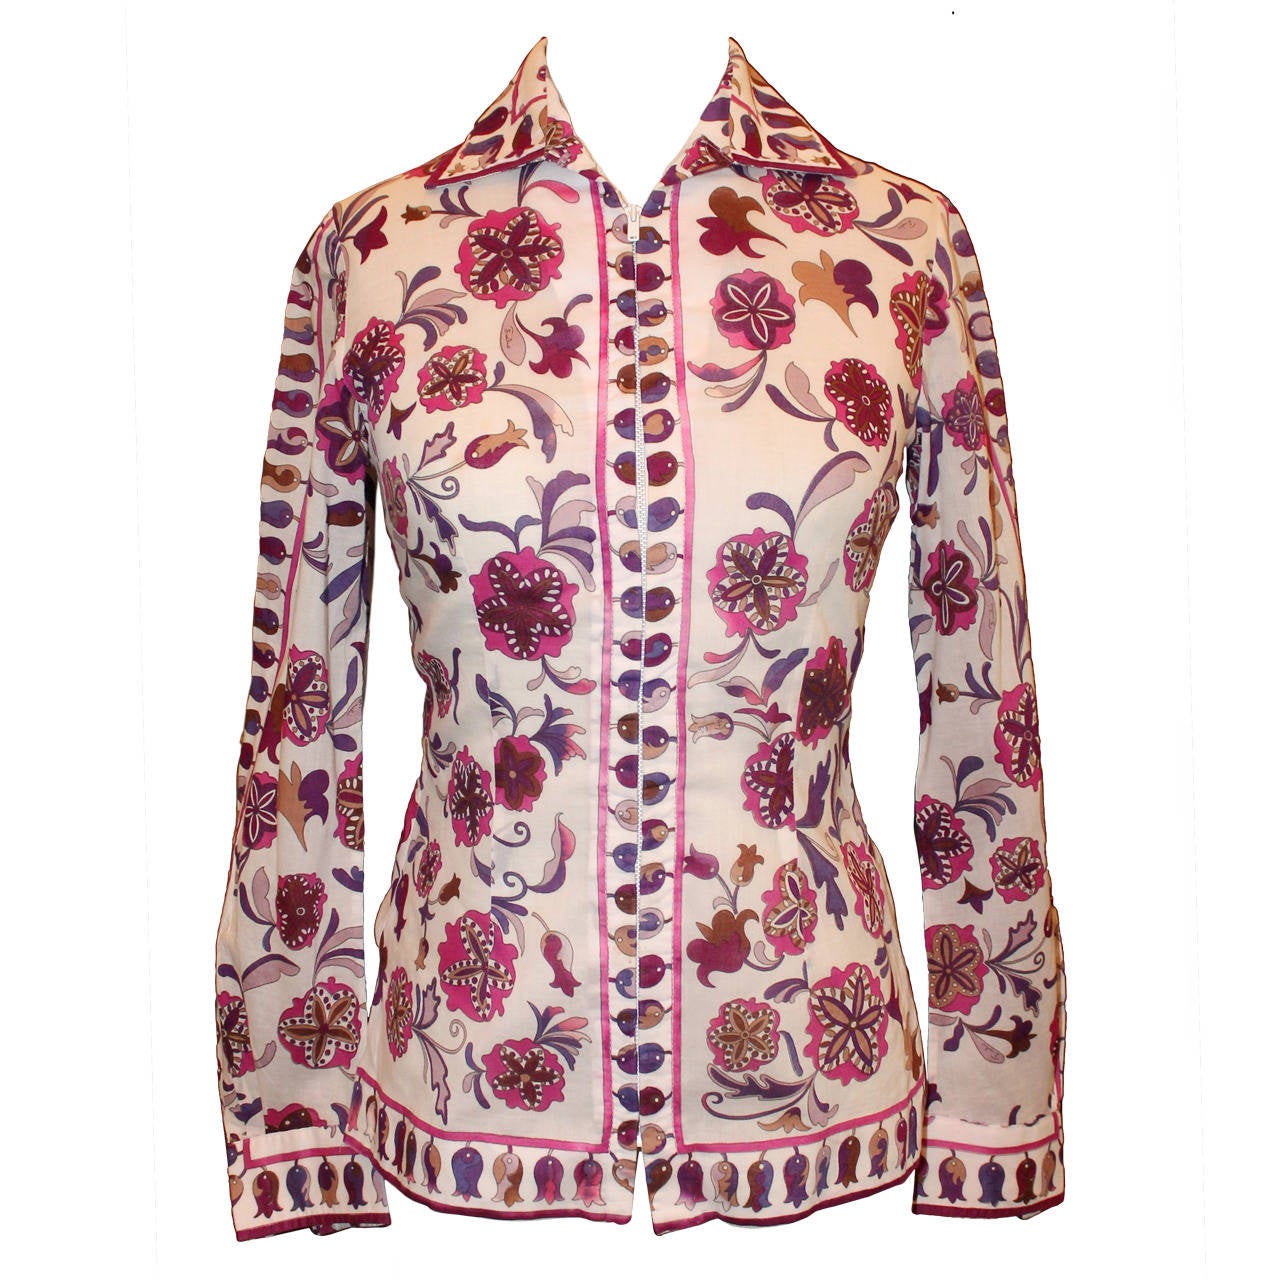 Pucci Vintage White, Purple, Pink Floral Print Jacket/Shirt - circa 1960s - S